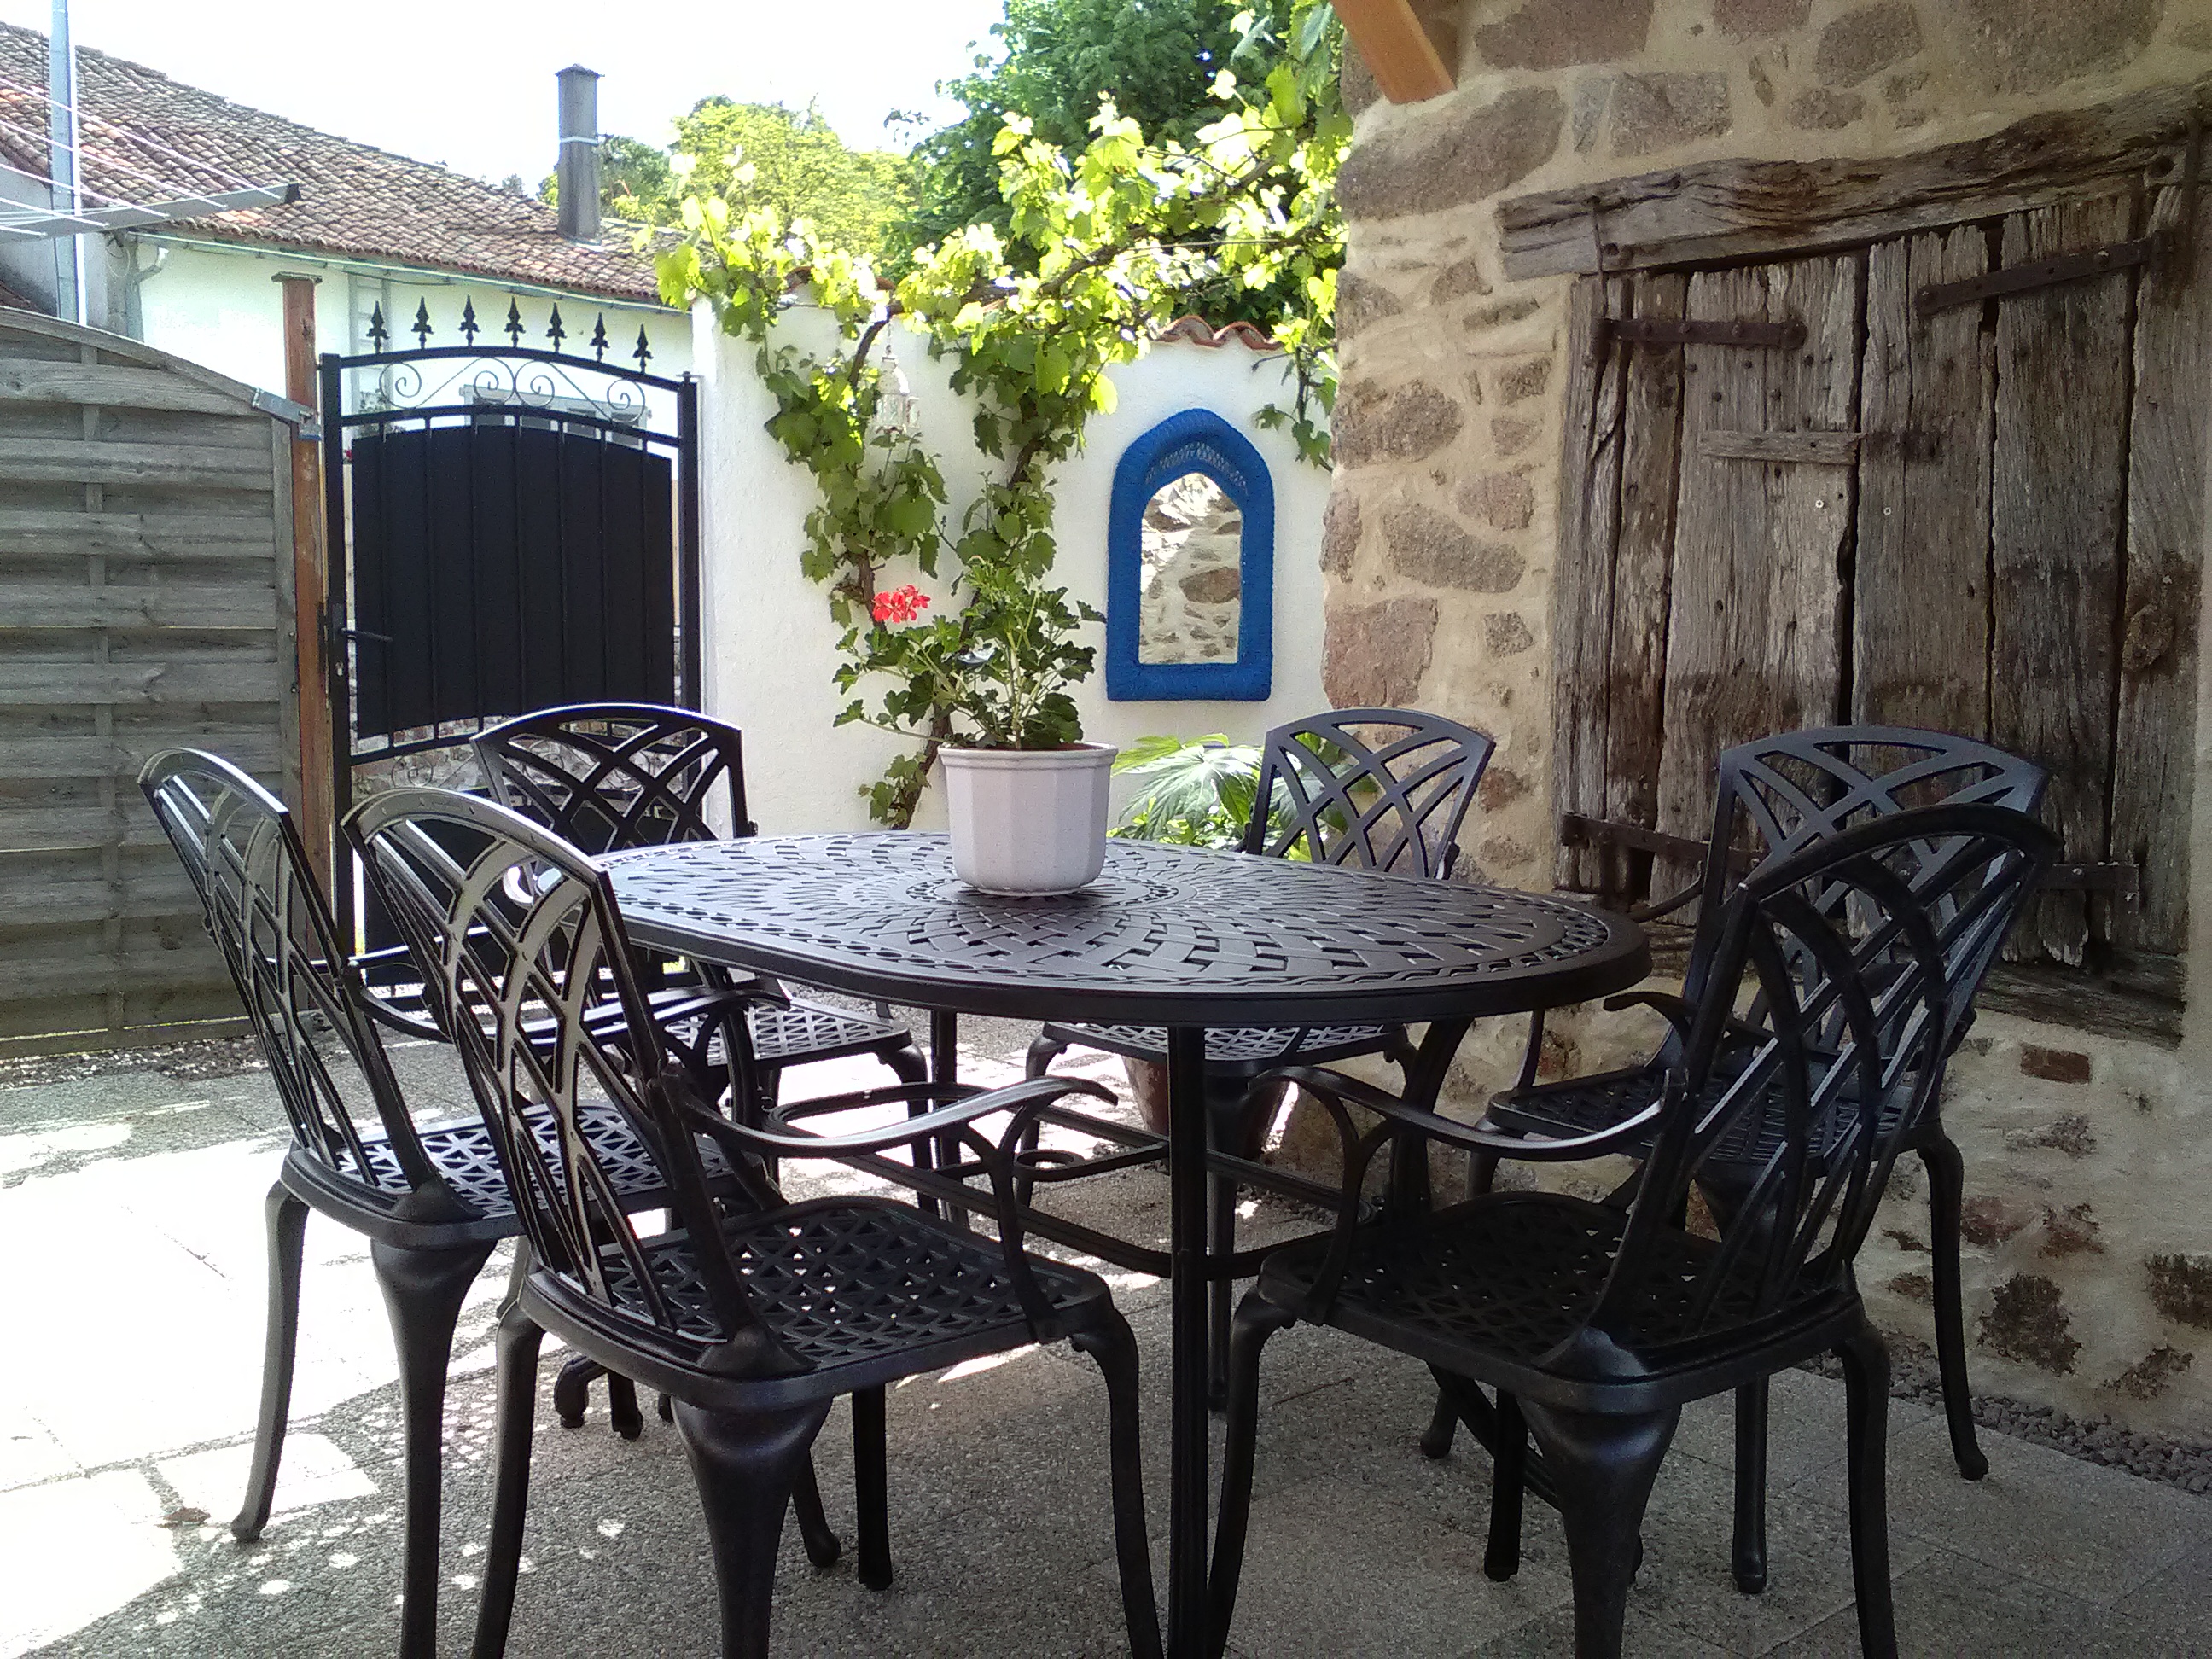 How to make a tablecloth for a garden table | June Oval Garden Table